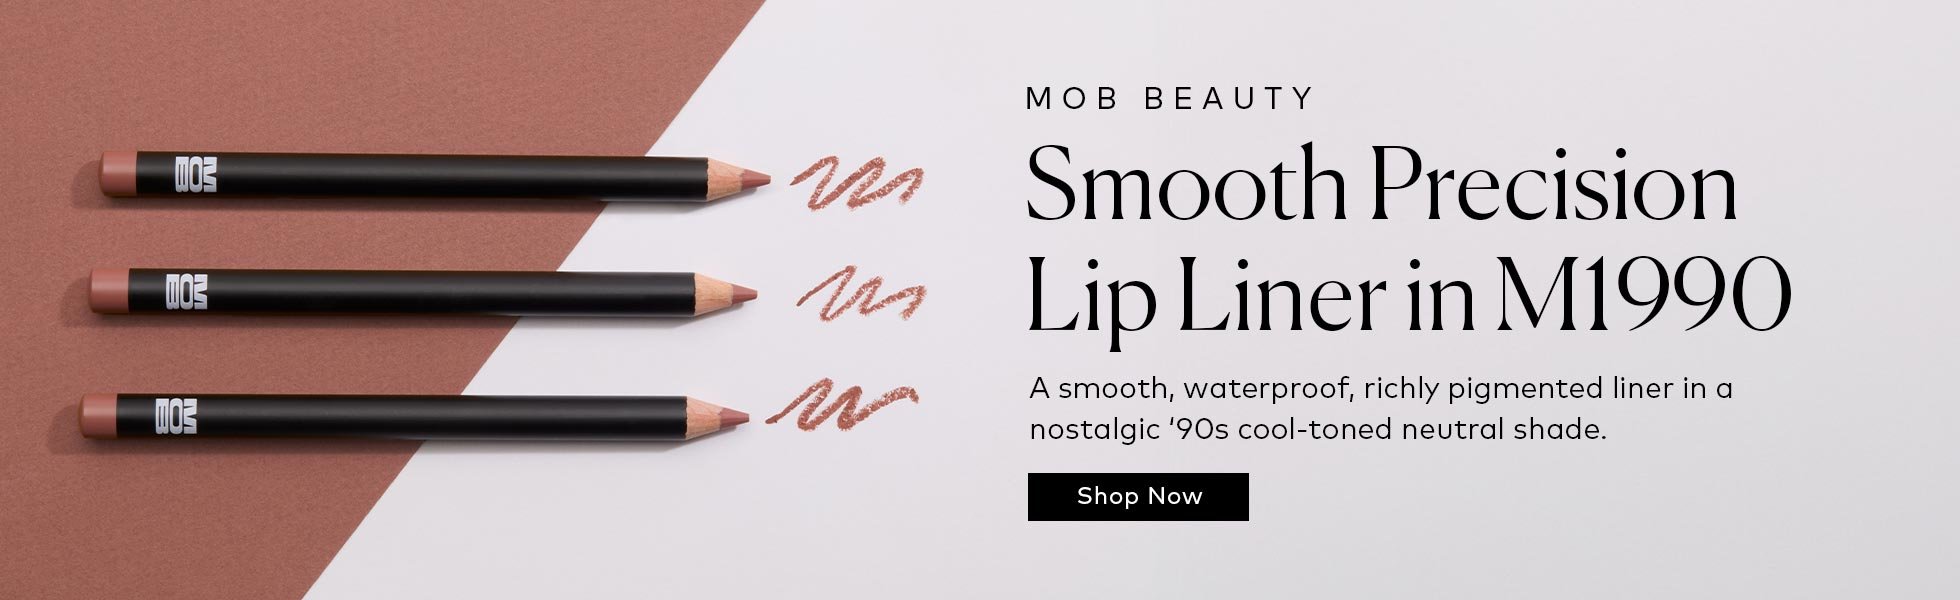 Shop the MOB Beauty Smooth Precision Lip Liner at Beautylish.com